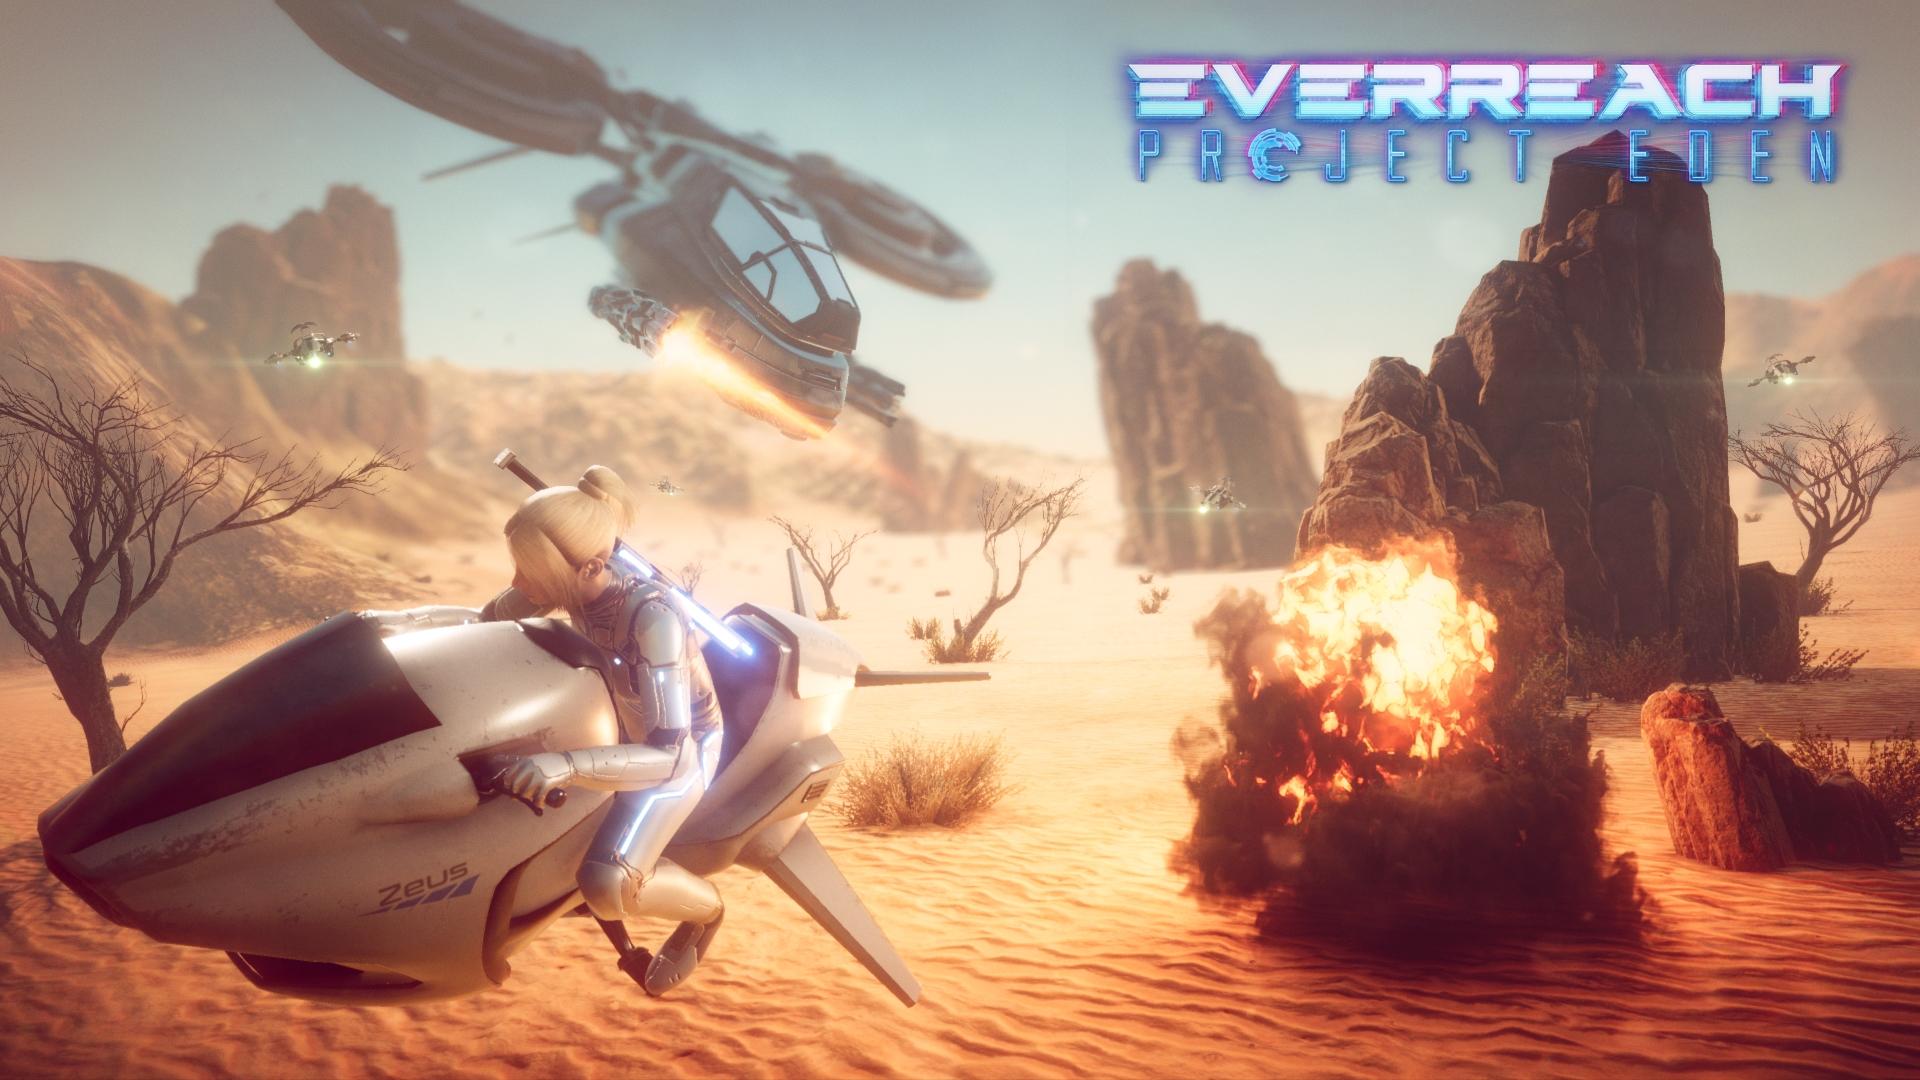 Everreach: Project Eden เวอร์ชัน Xbox One และ PC เลื่อนวางจำหน่ายออกไปเป็นช่วงเดือนธันวาคมนี้